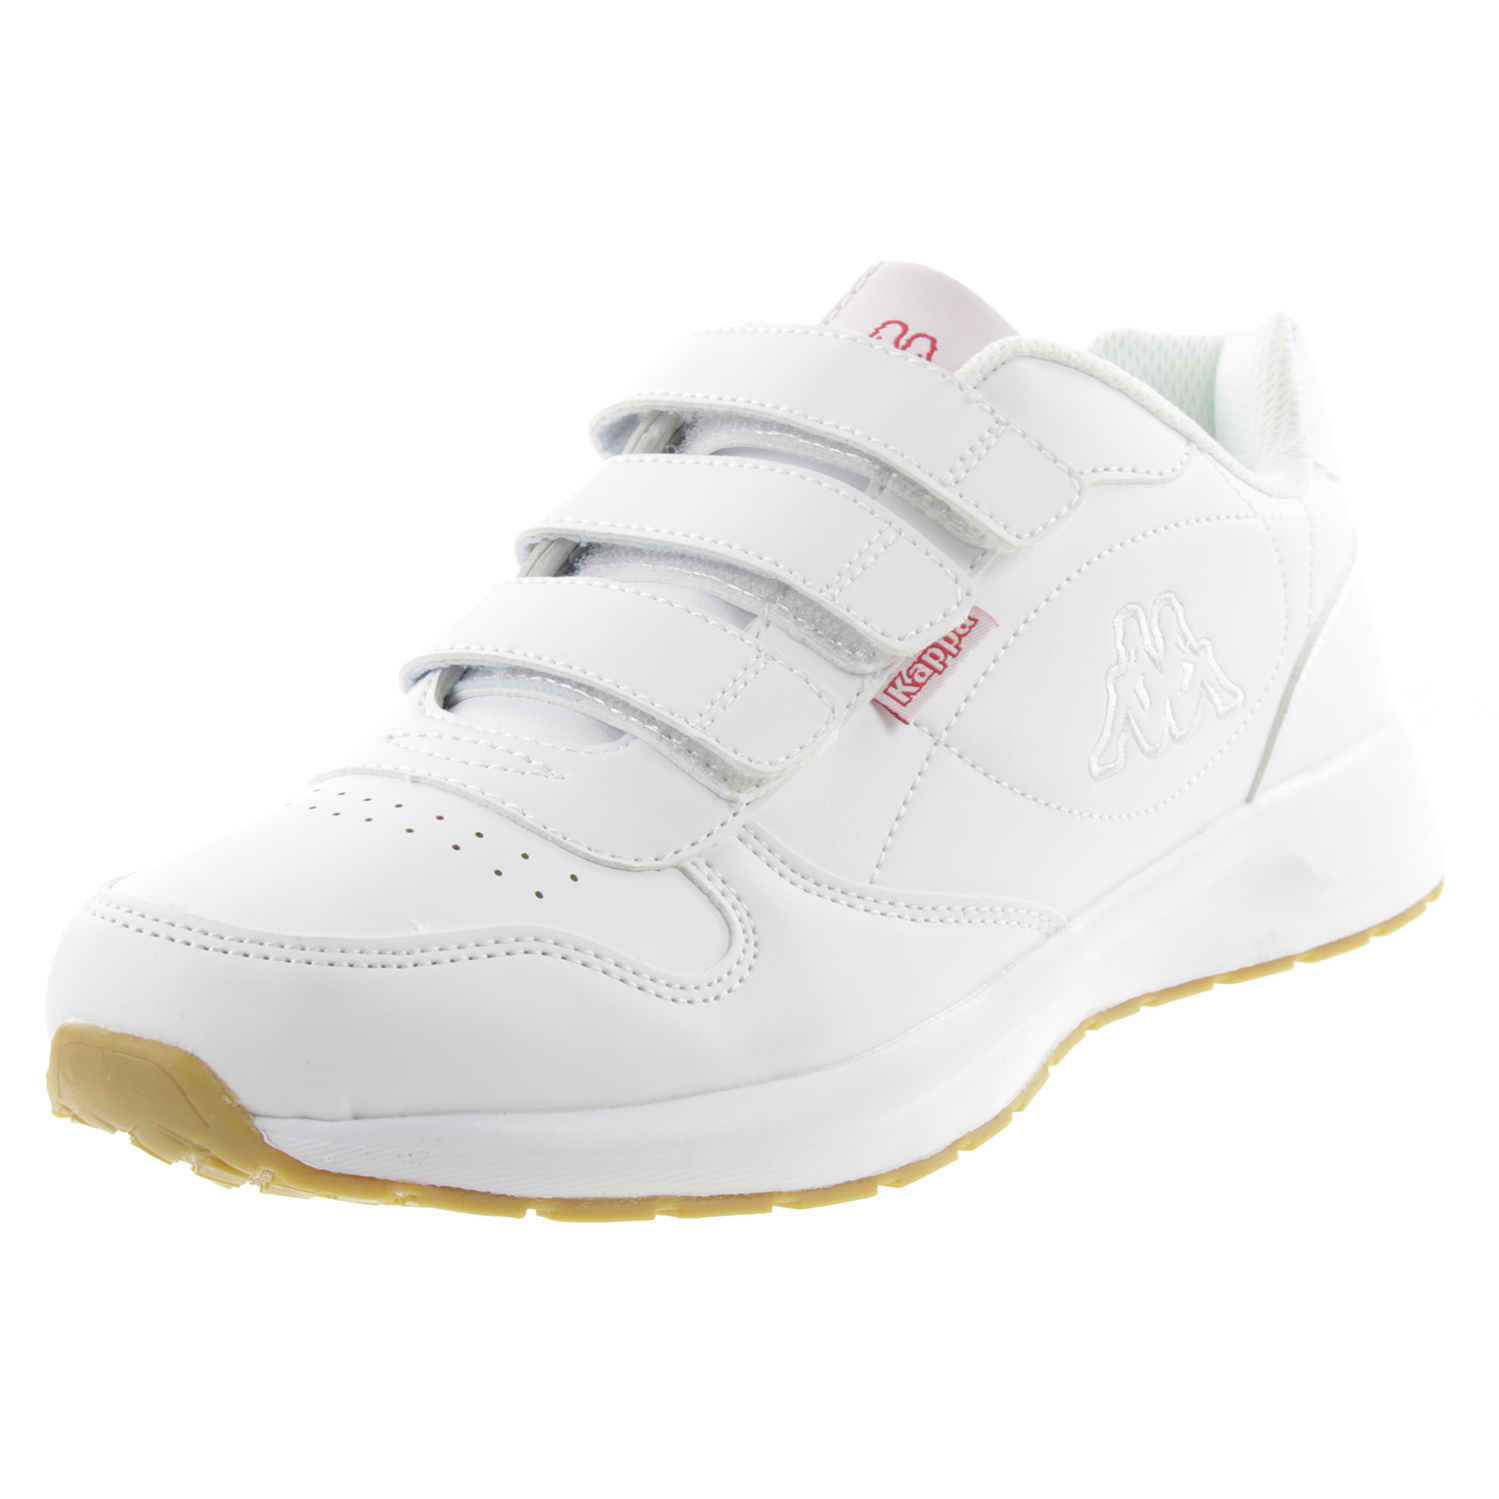 Kappa Unisex-Erwachsene Base VL Sneaker, Weiß (White 1010), 39 EU